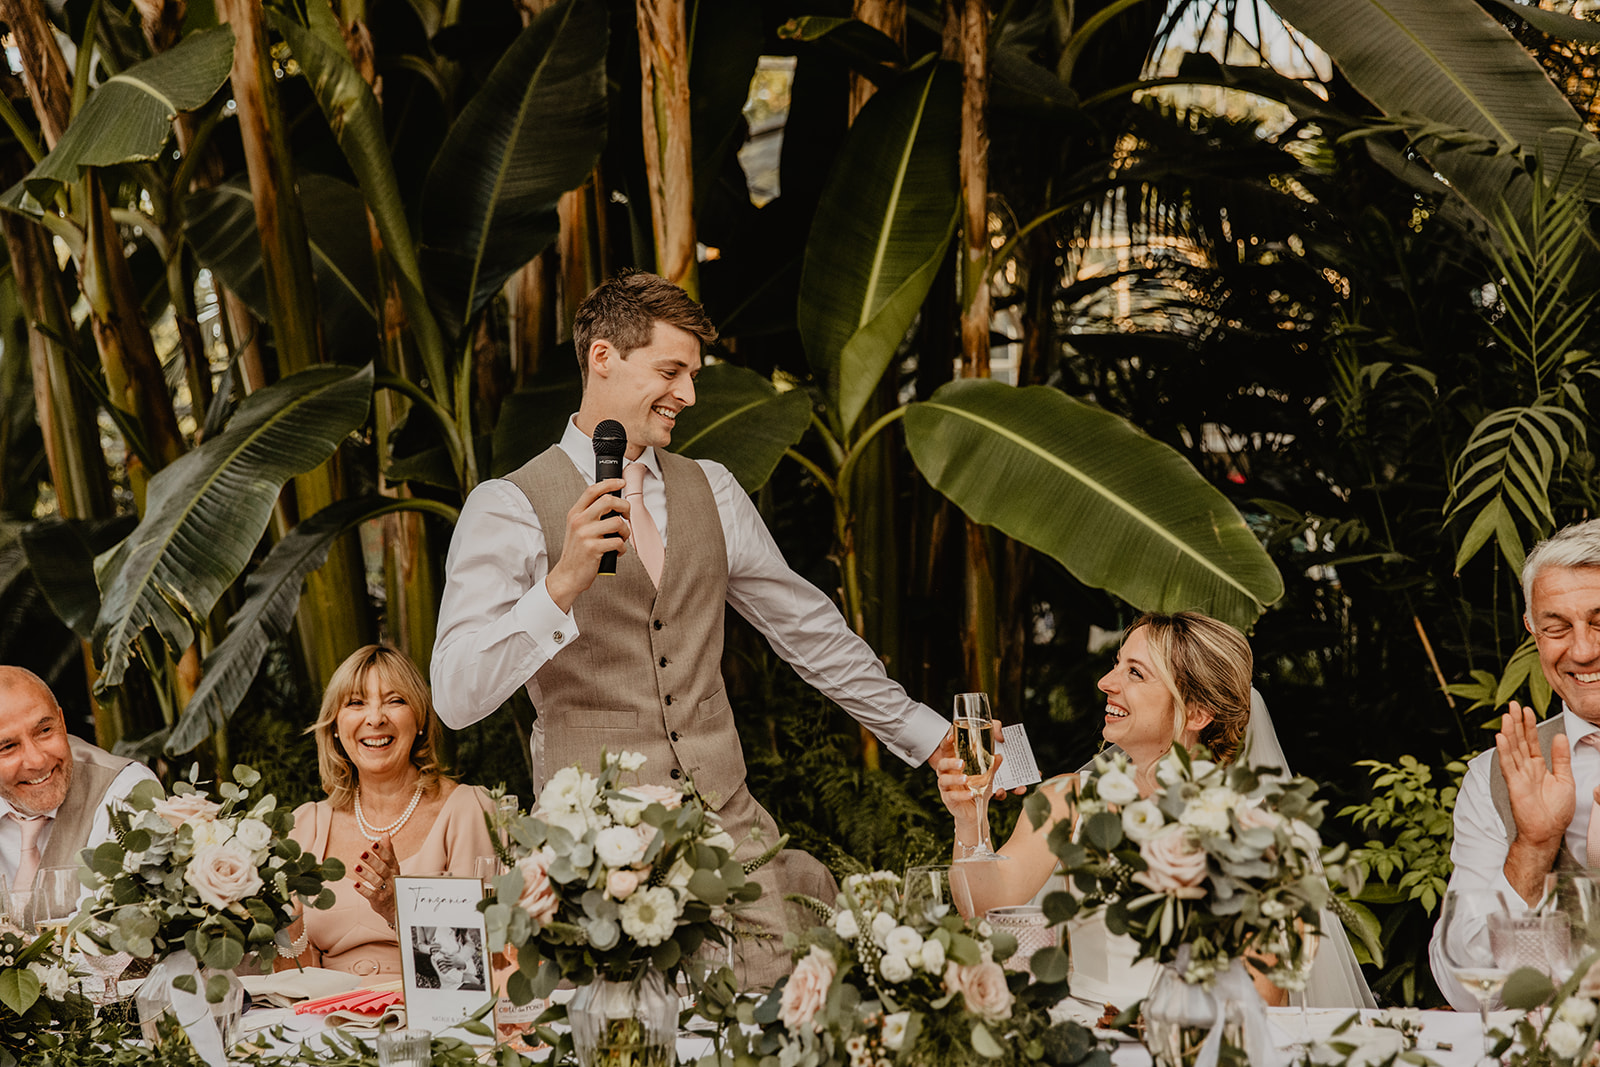 Wedding reception speeches at a RHS Gardens Wisley Wedding. By Olive Joy Photography